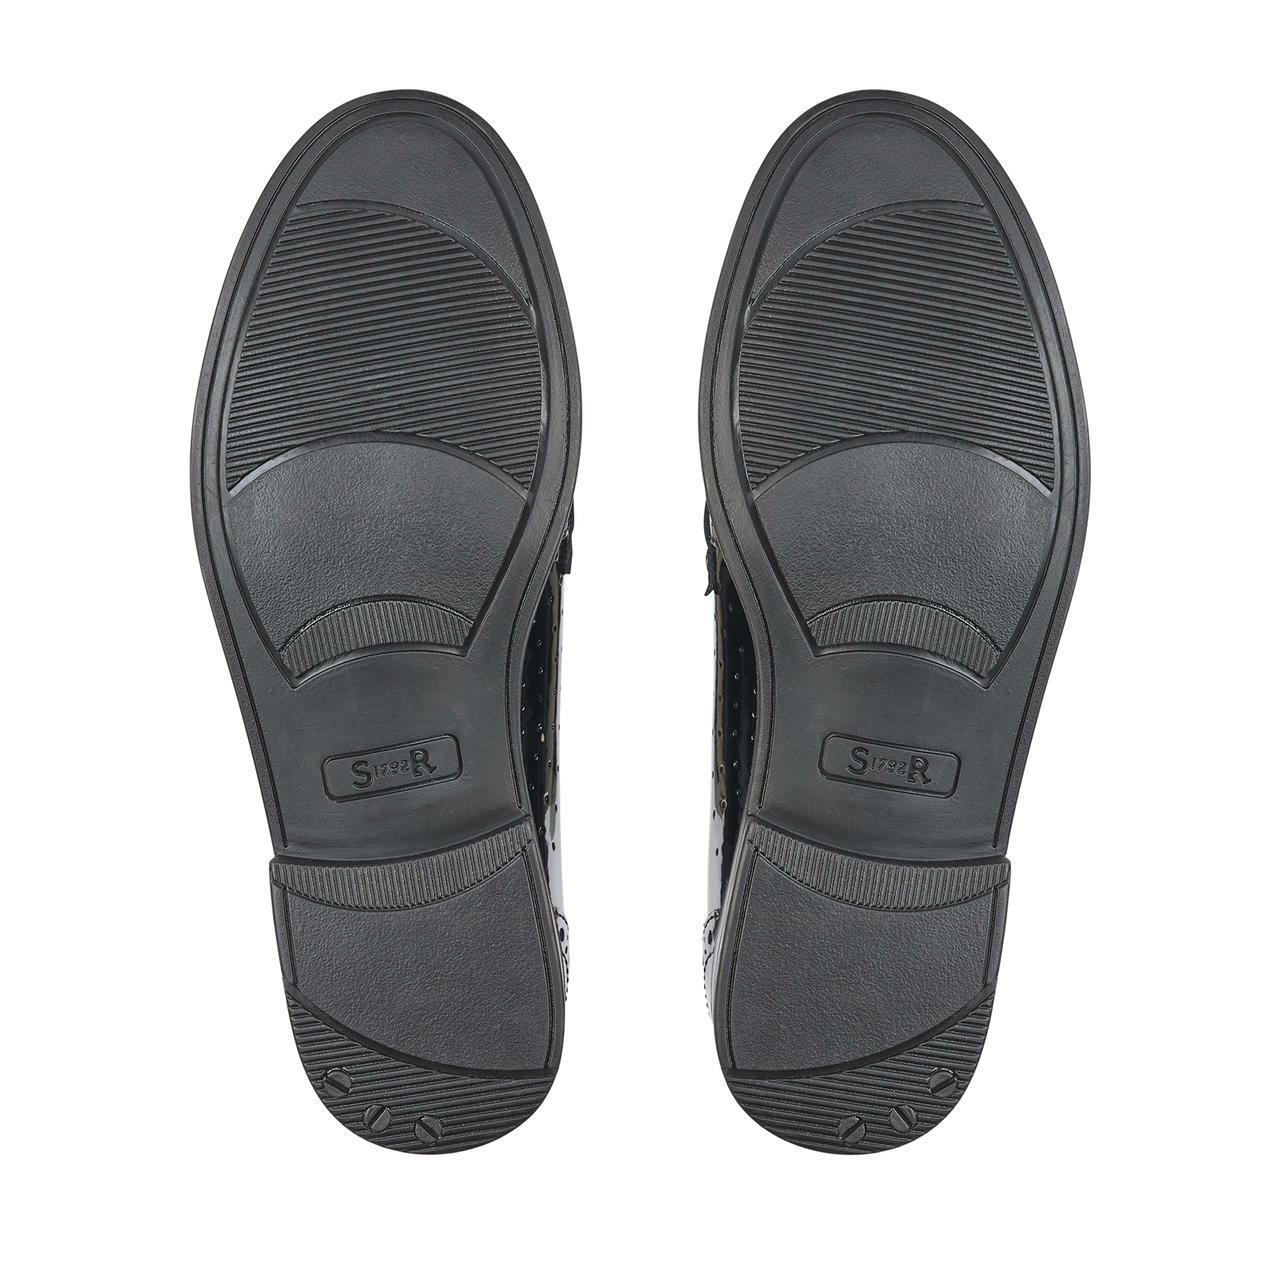 Start-Rite | Sketch | Senior Girls Slip On Loafer School Shoe | Black Patent Leather